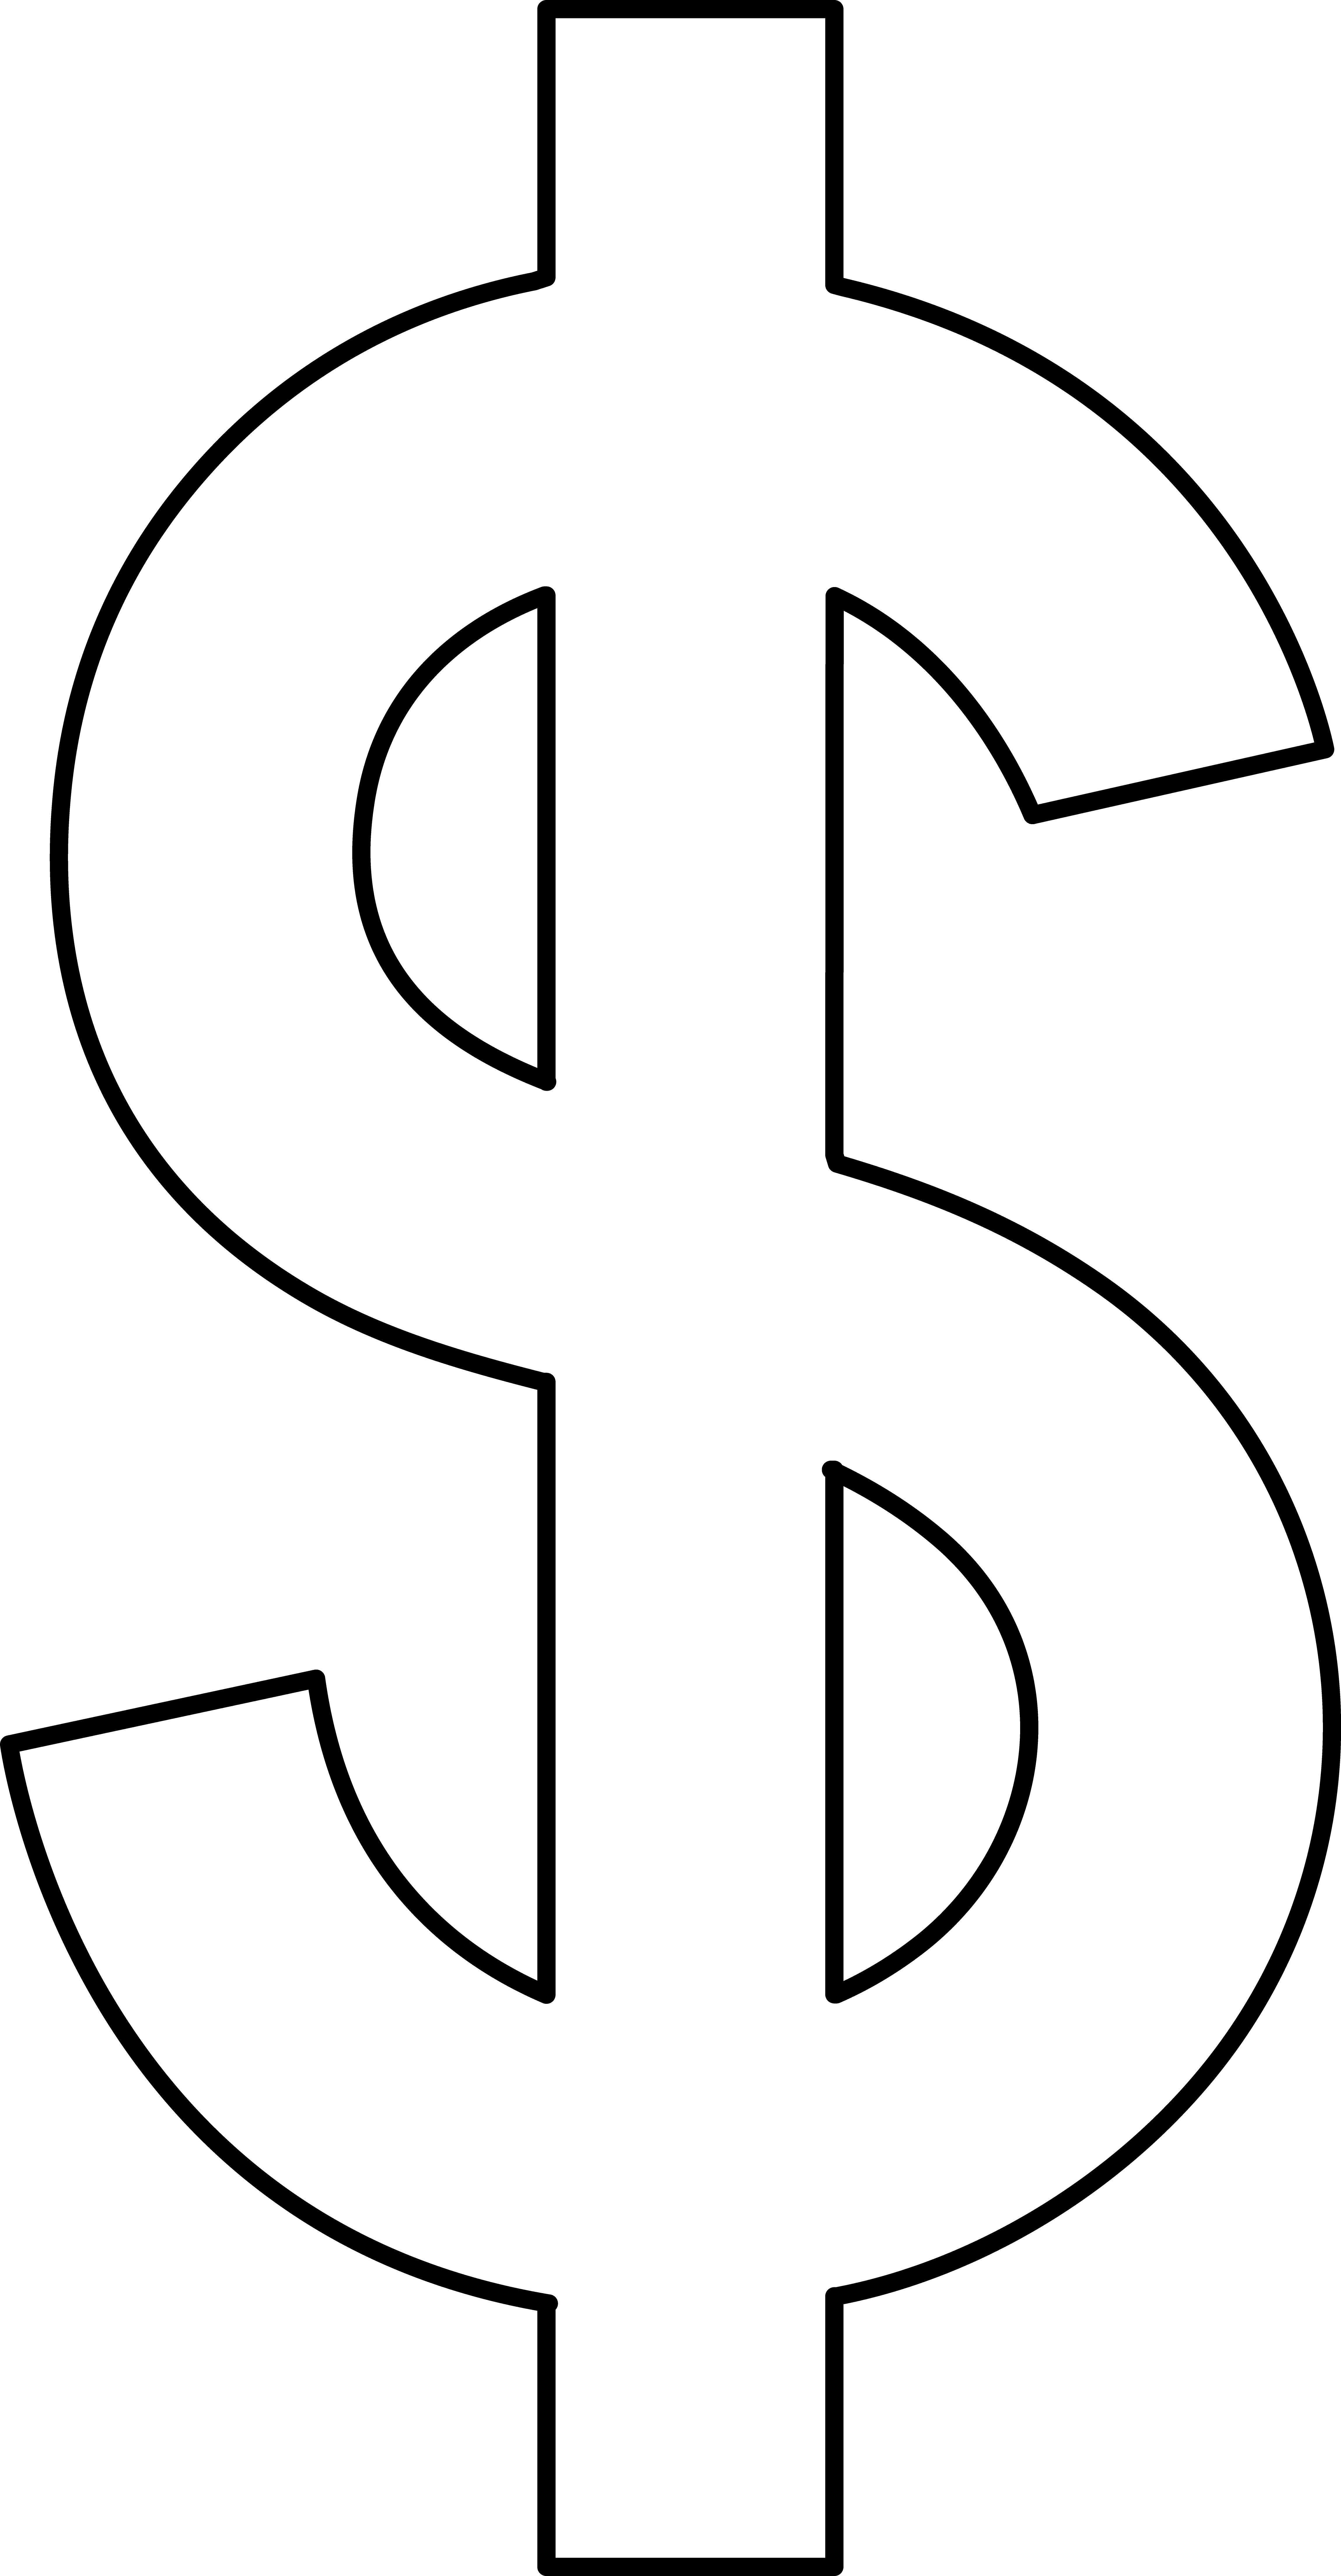 Dollar sign logo clipart